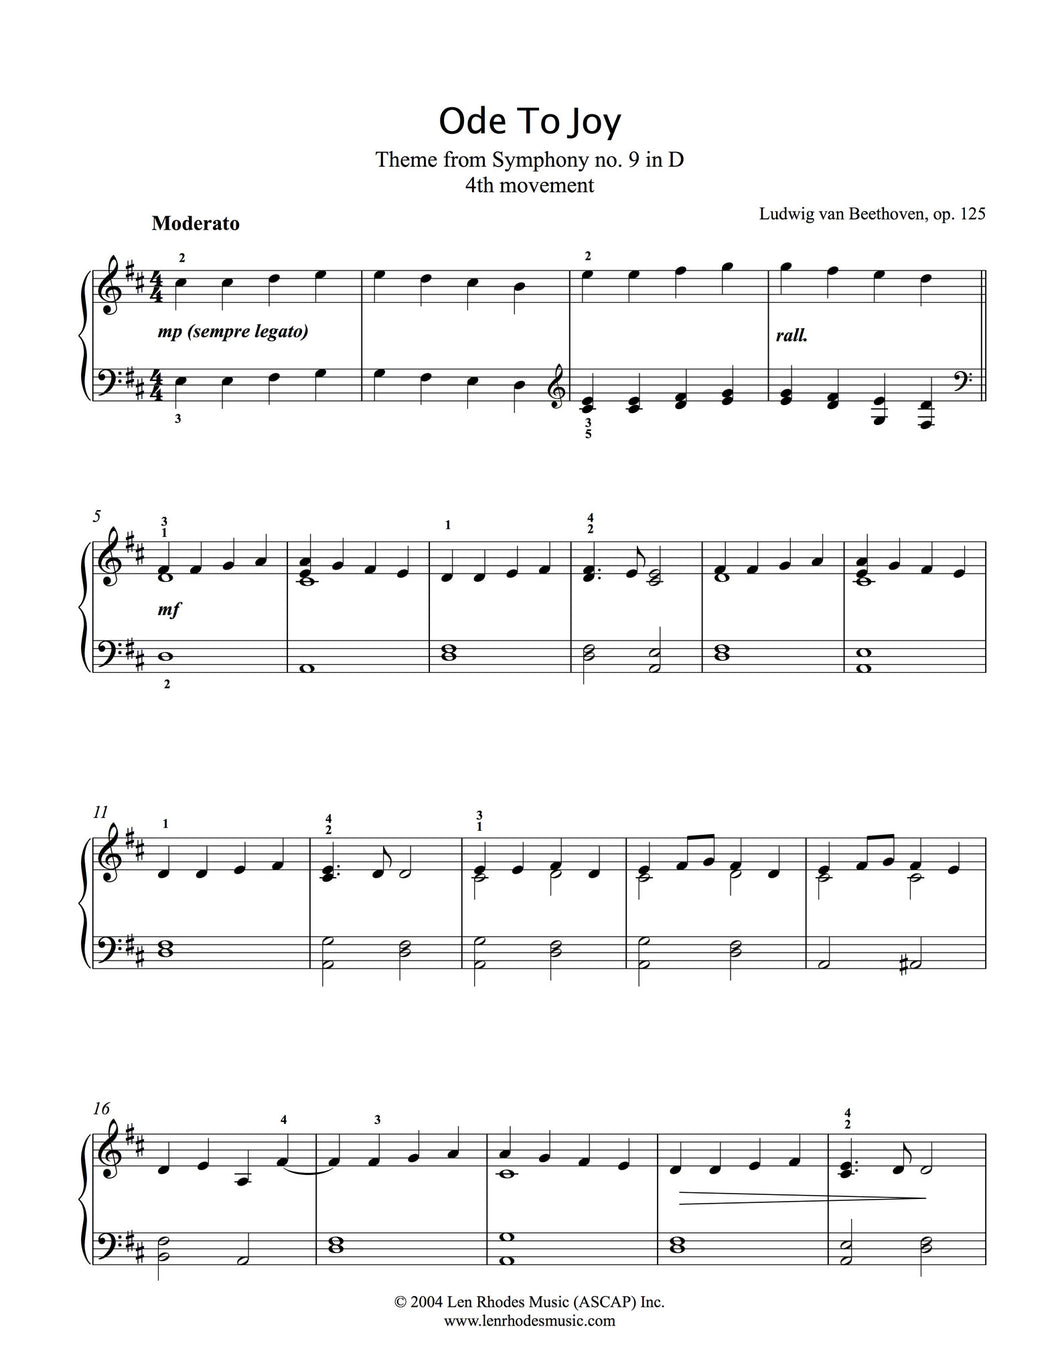 Ode to Joy, Beethoven - easy Piano